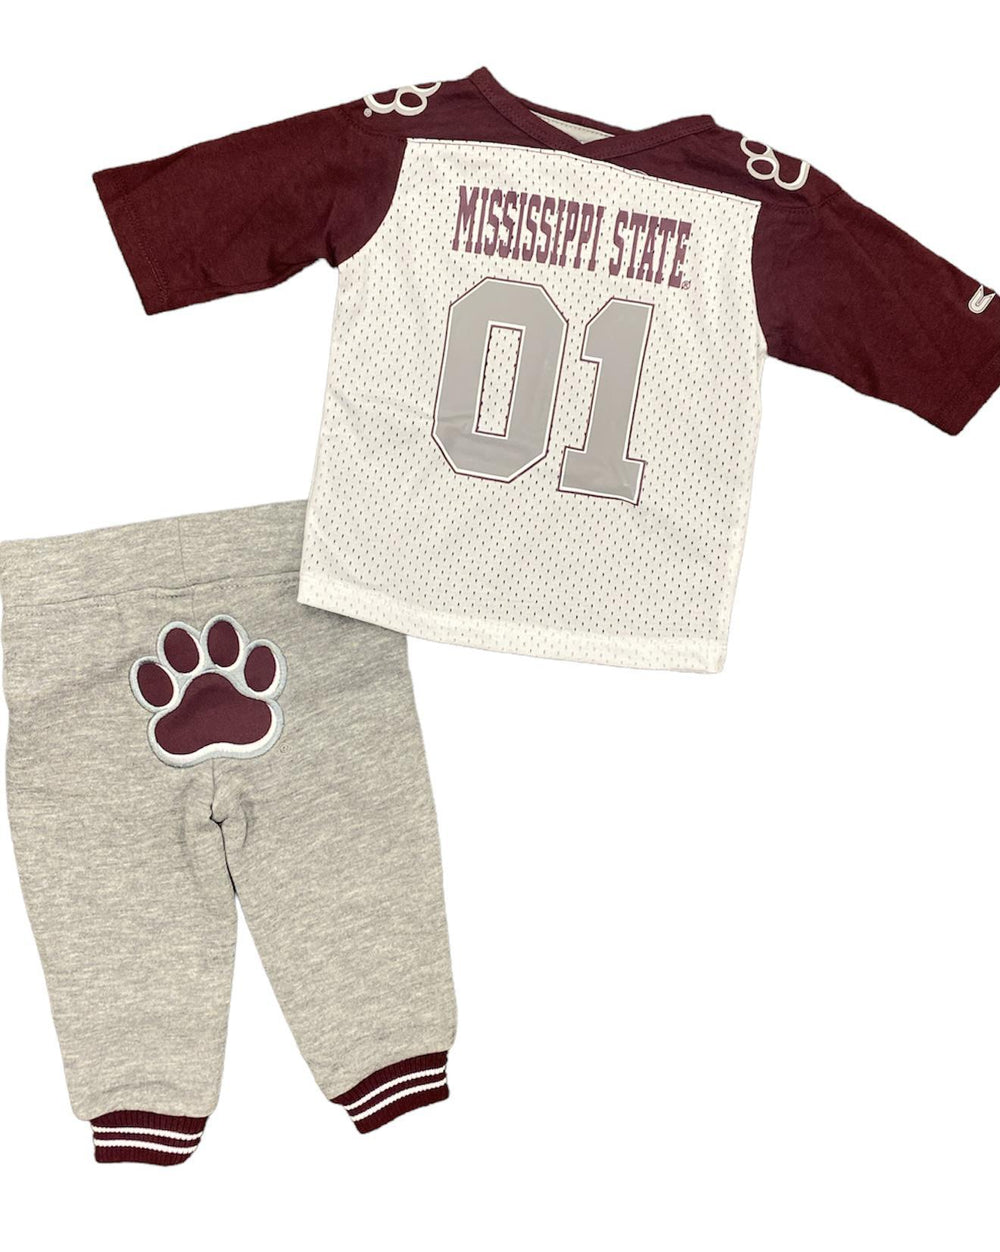 Mississippi State Infant Football Set